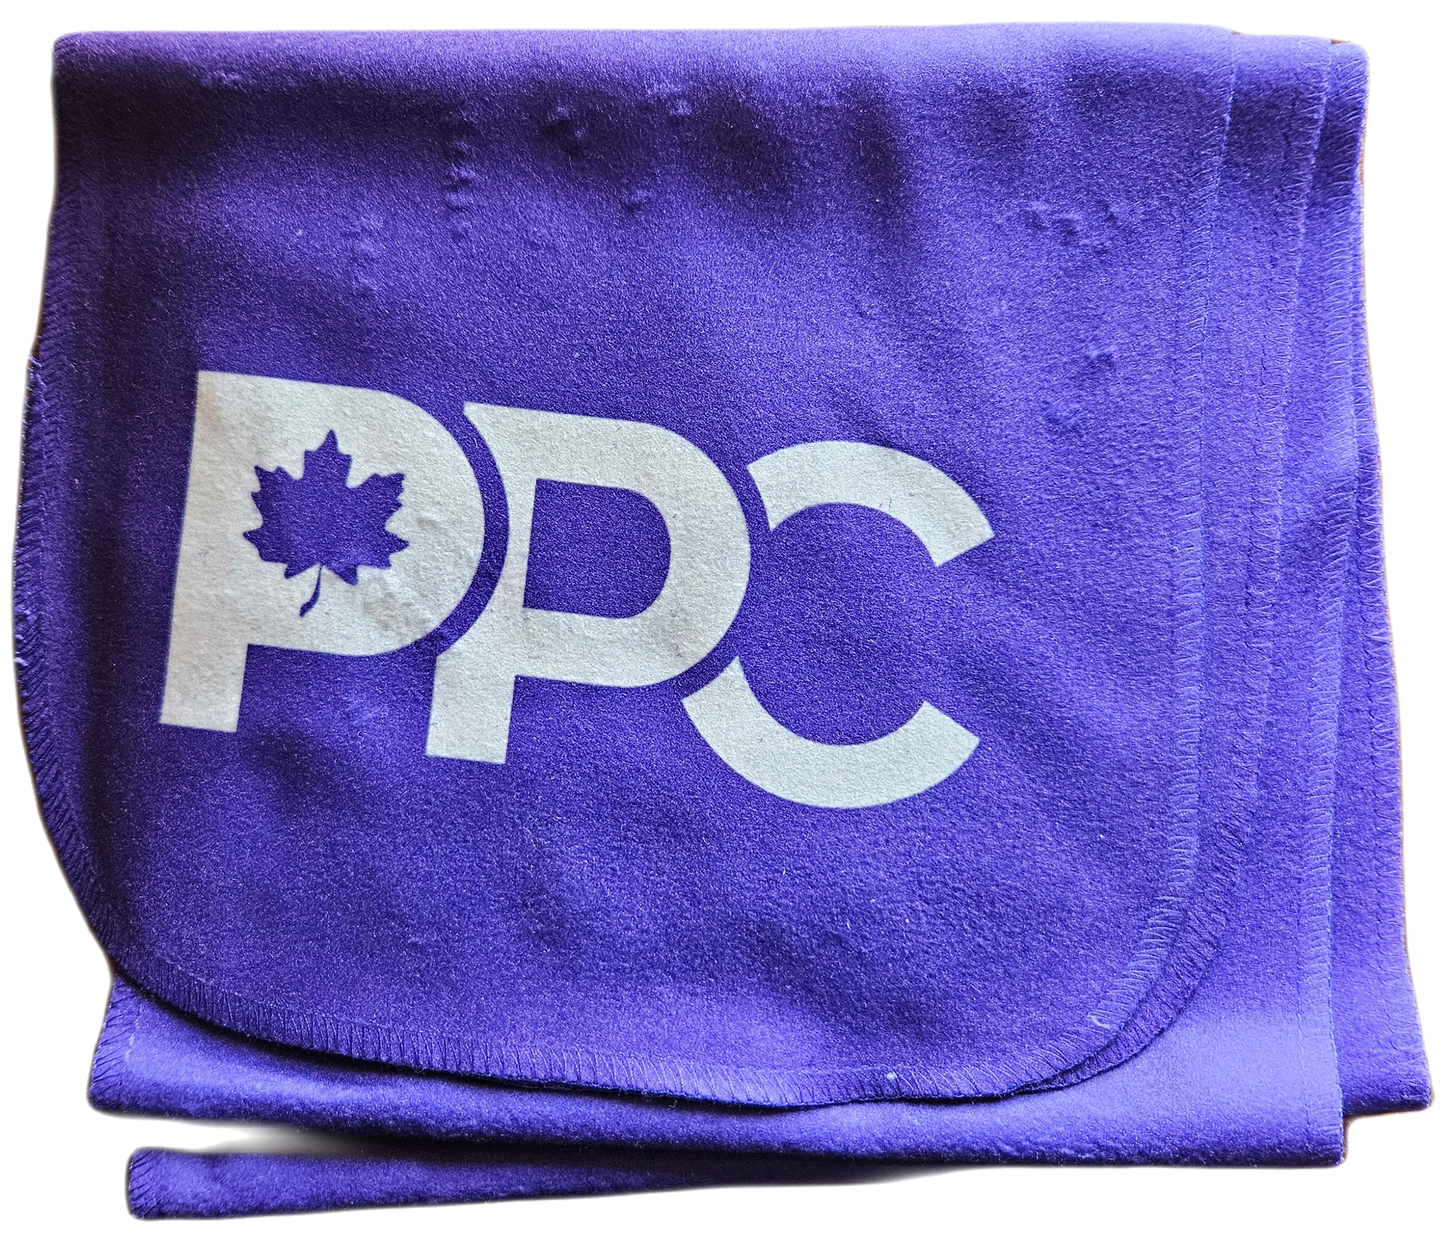 PPC Scarves